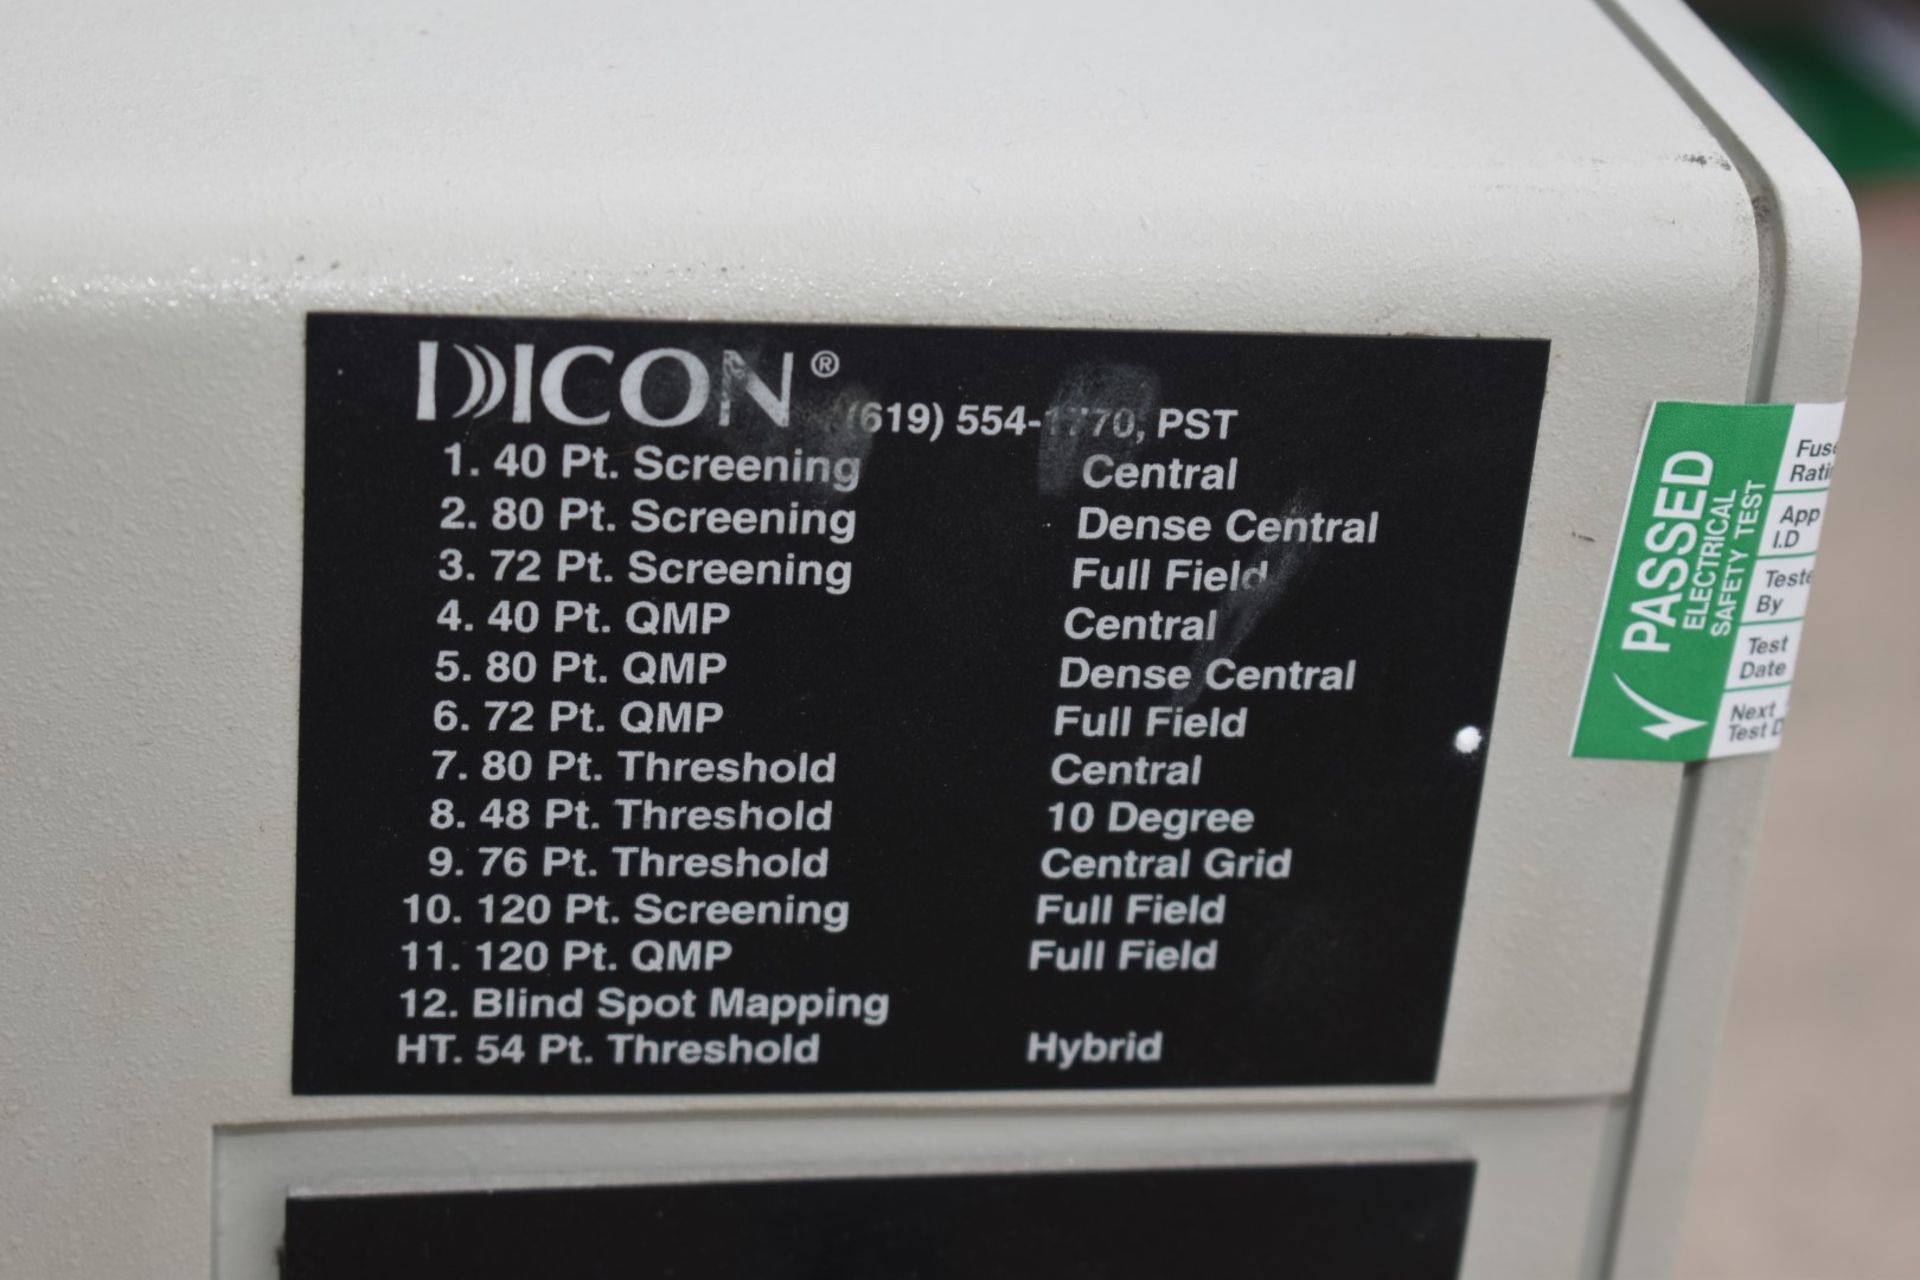 1 x Dicon SST Autoperimeter - Visual Field Analyzer - Ref: GTI114 - CL645 - Location: Altrincham - Image 8 of 13